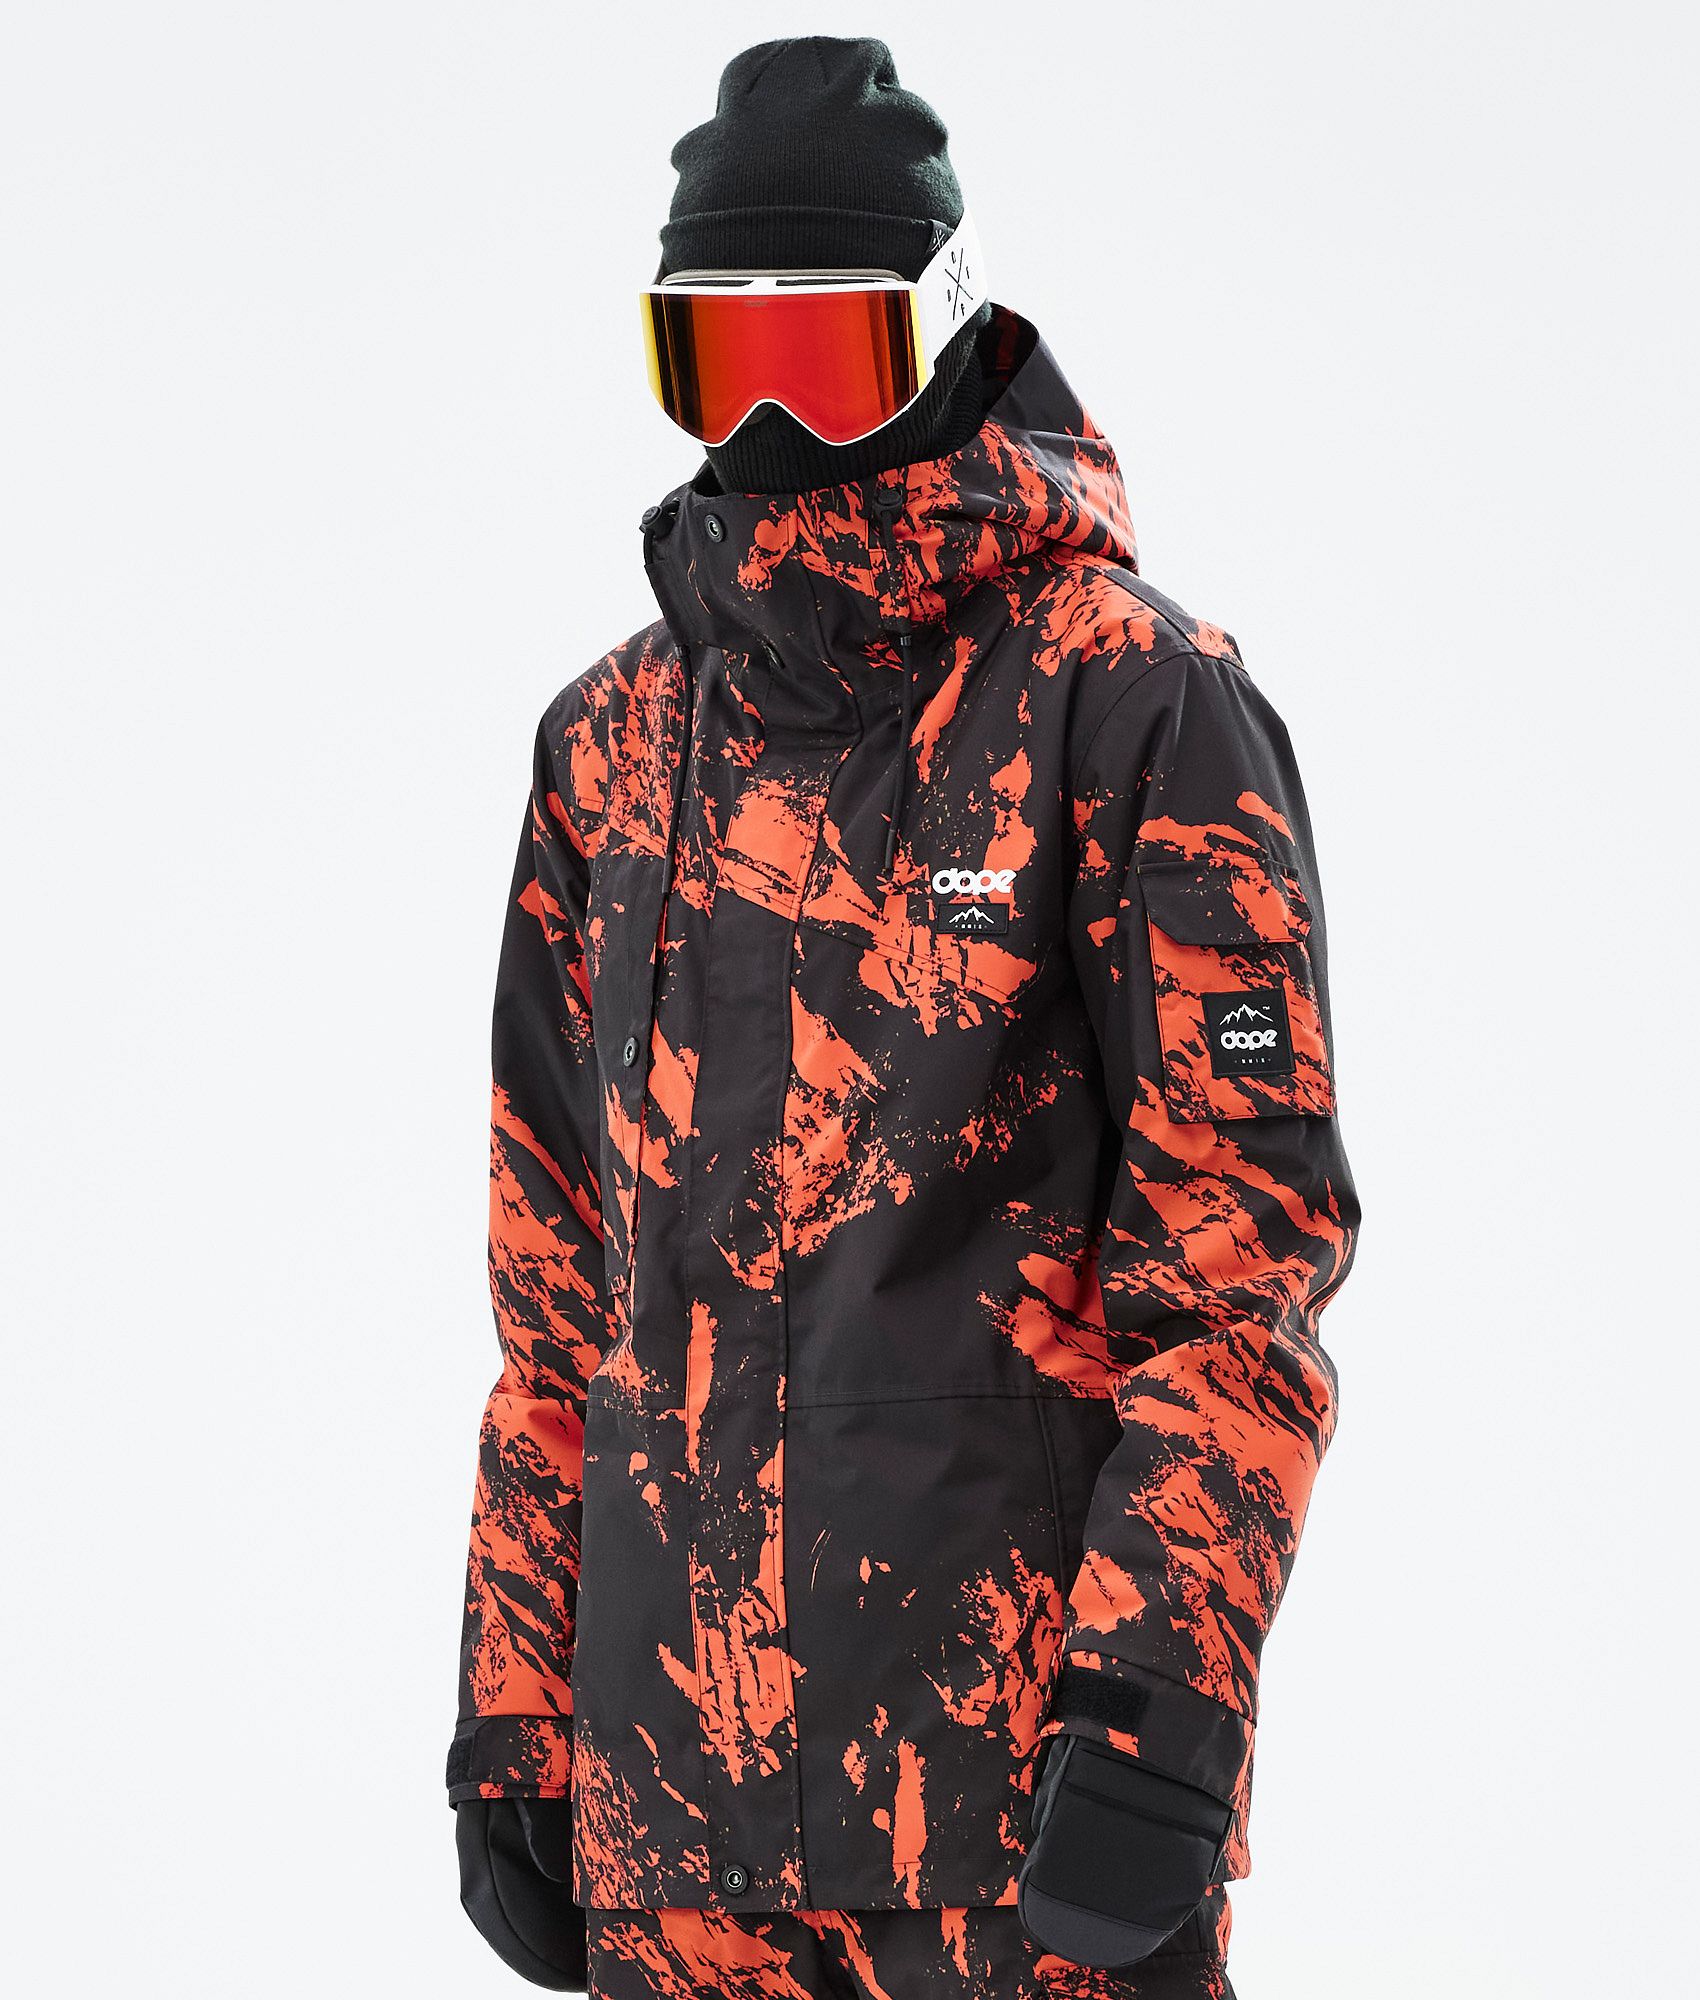 buy snowboard jackets online